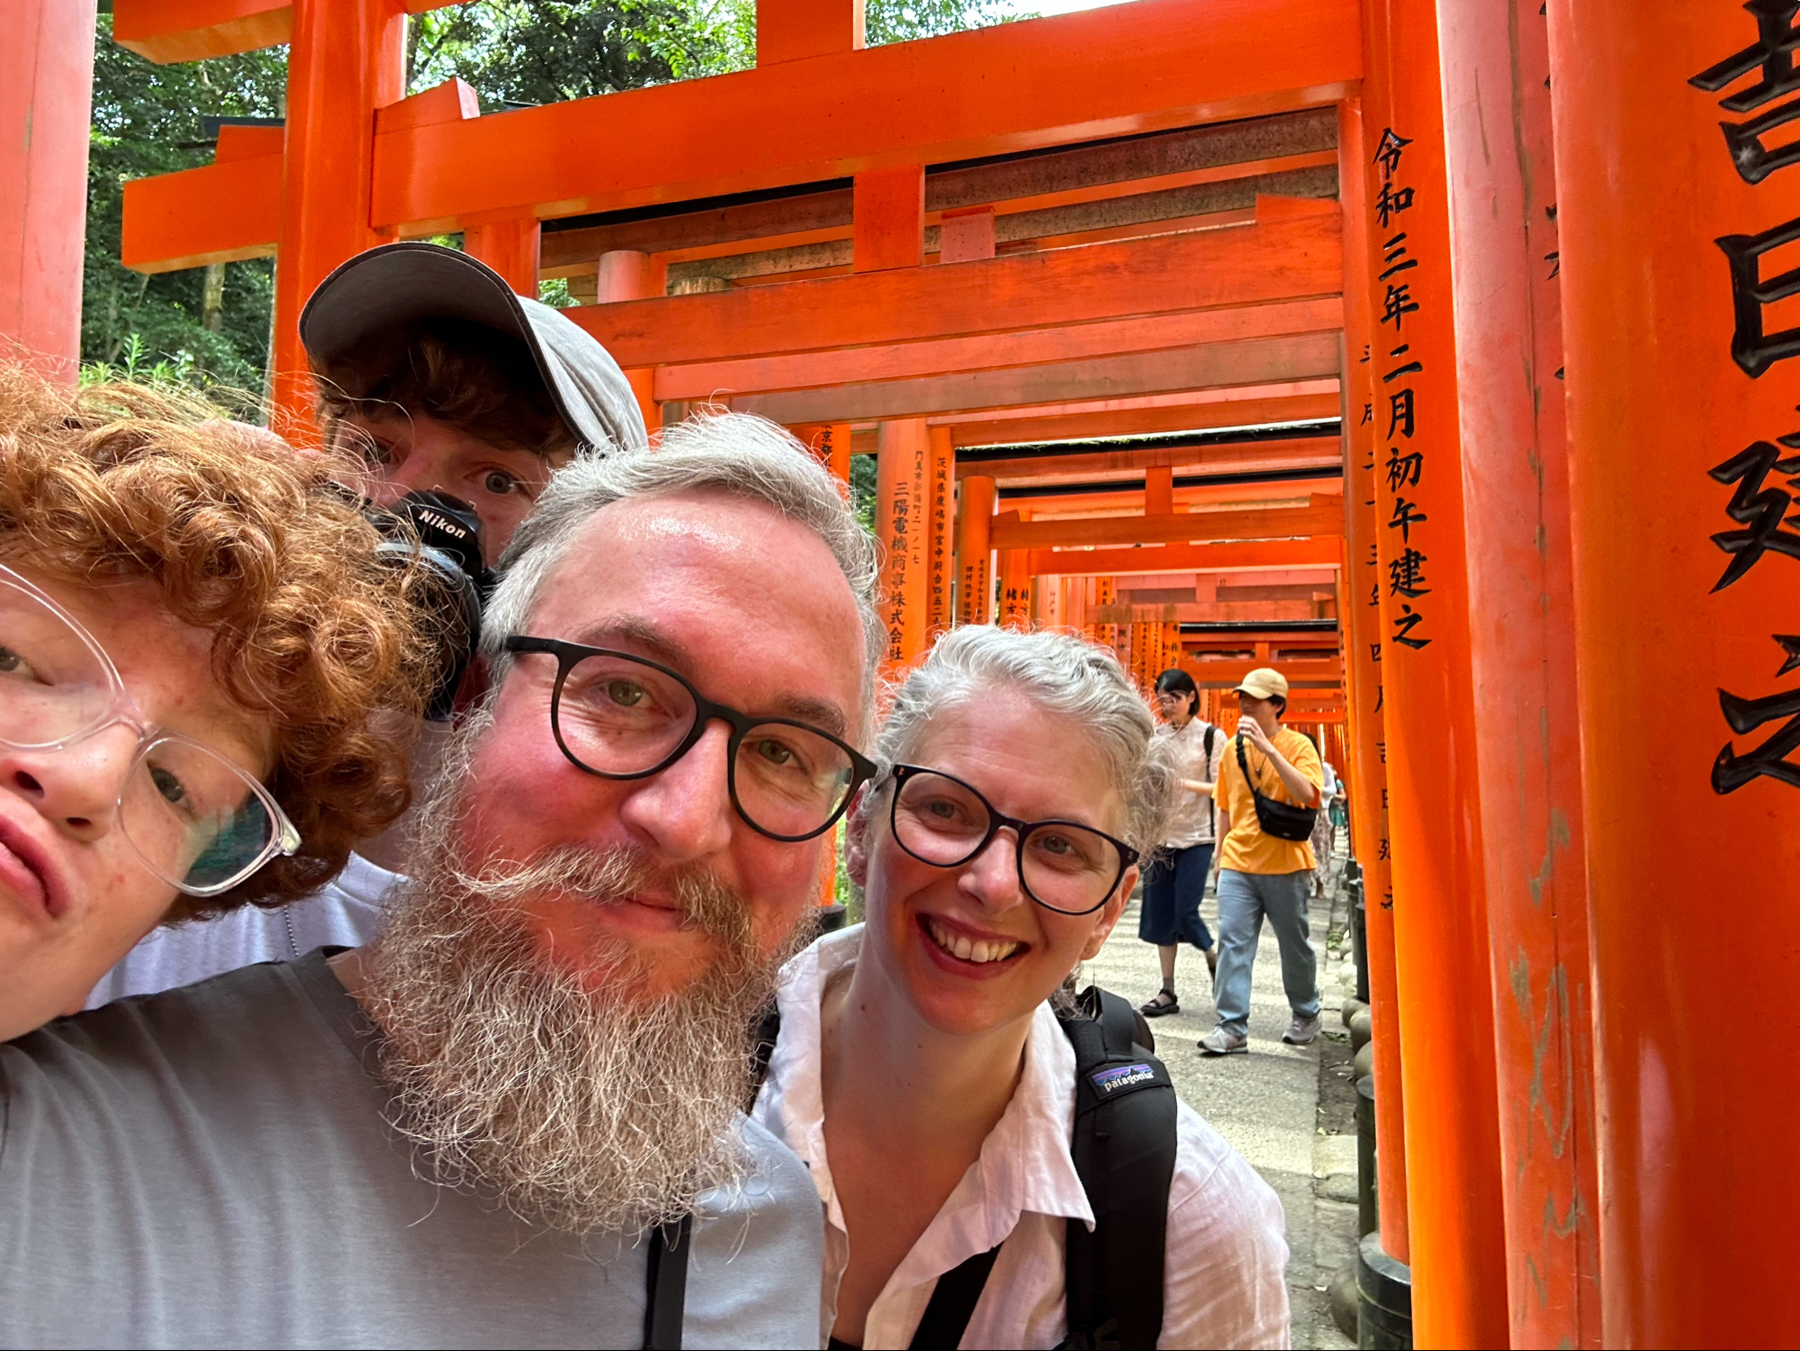 The whole family taking a selfie in front of vibrant orange torii gates at Fushimi Inari Shrine in Kyoto, Japan.